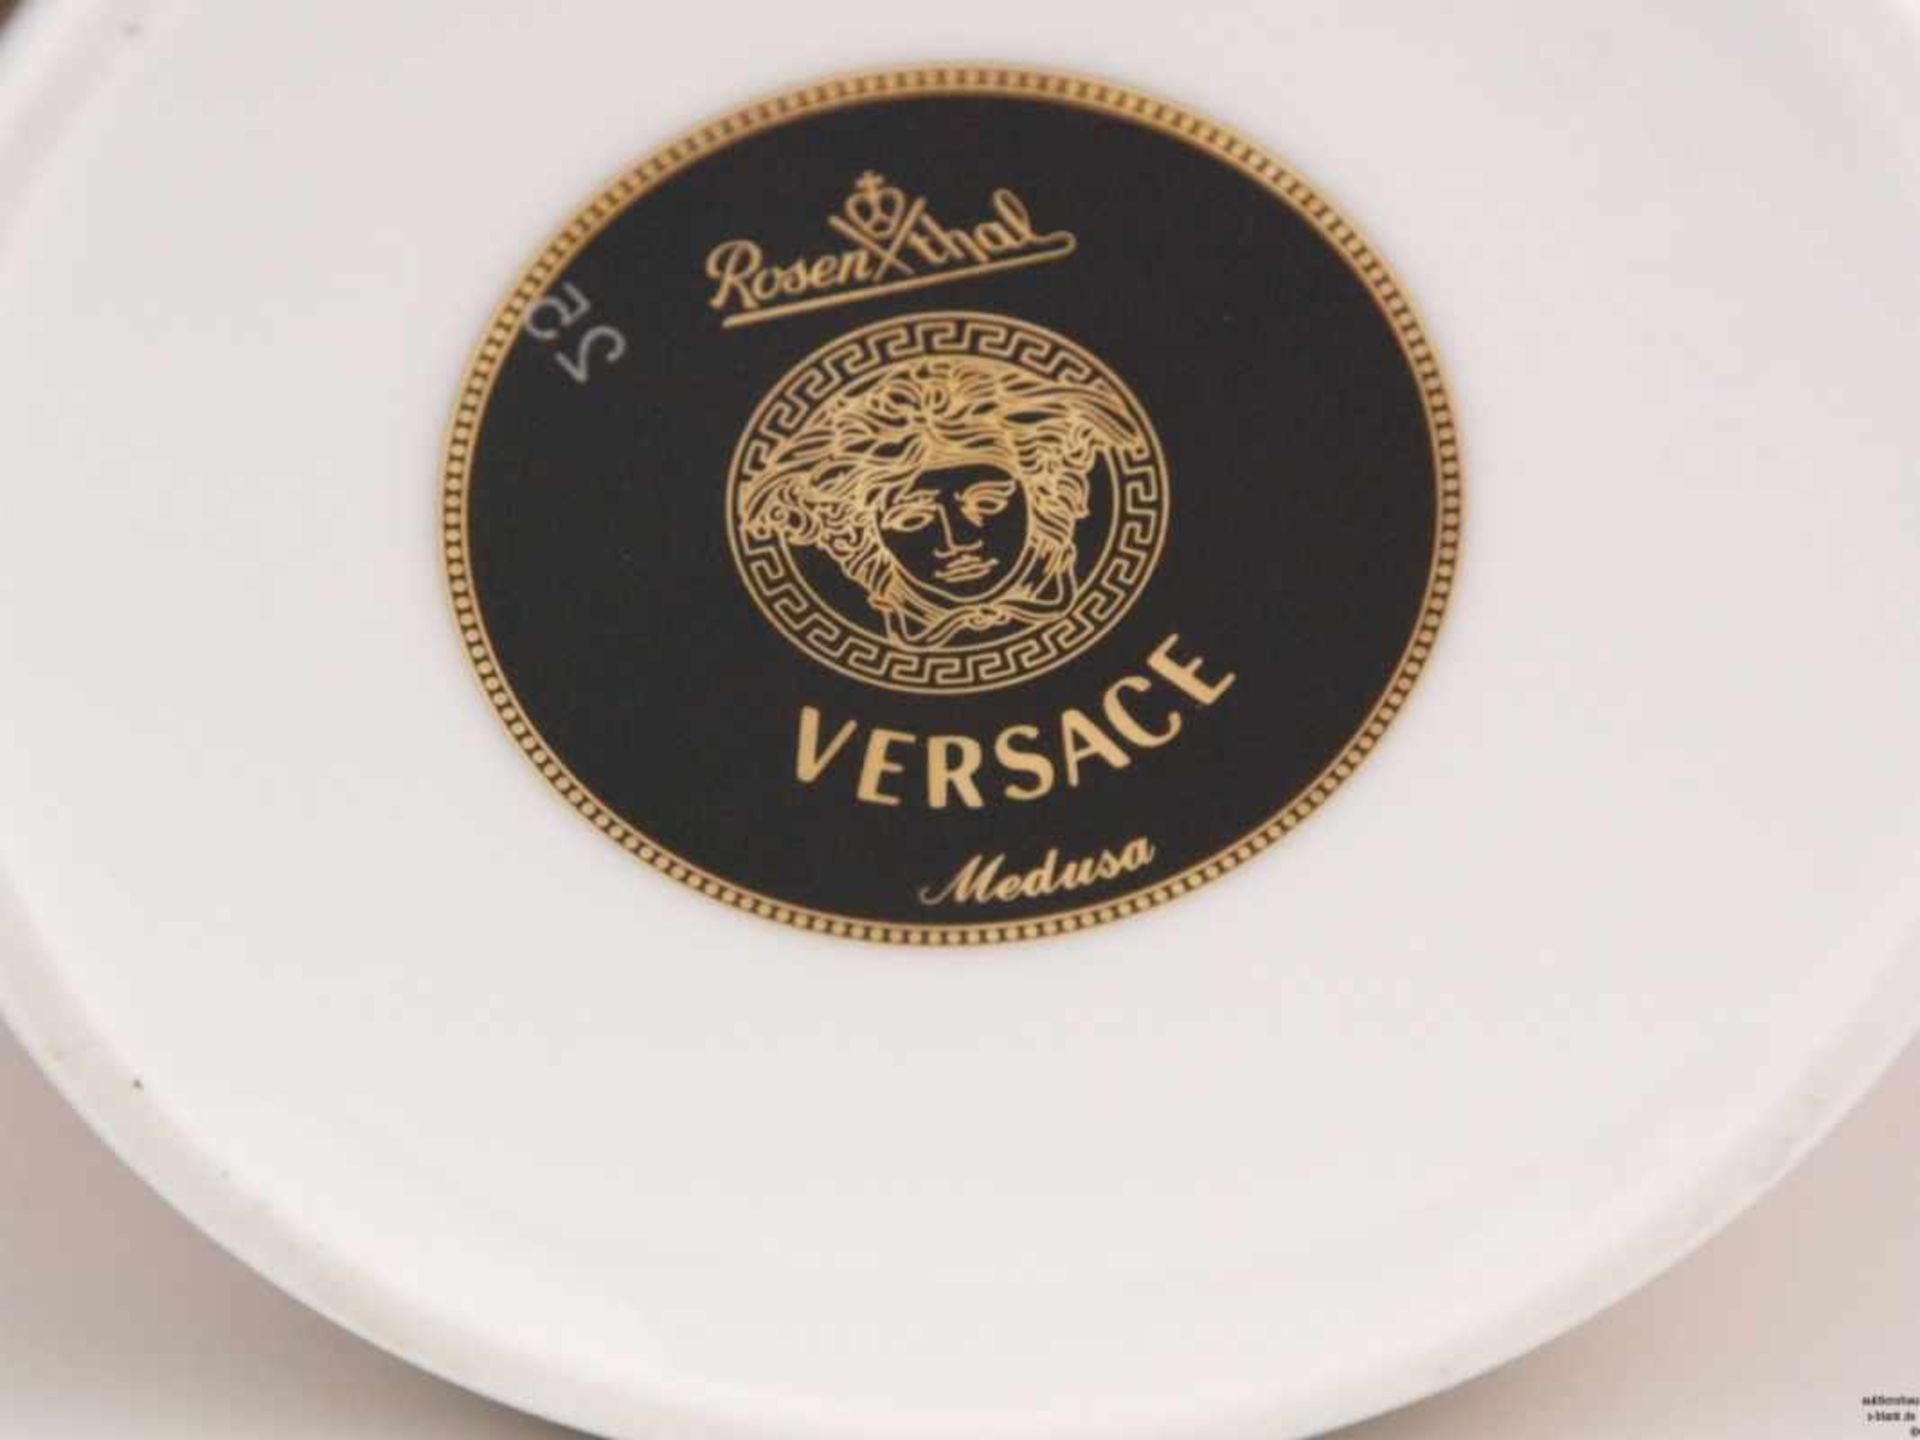 Versace Vase 'Medusa', Rosenthal - Boden mit gold/schwarzem Stempel 'Rosenthal, Versace, Medusa', - Image 5 of 5